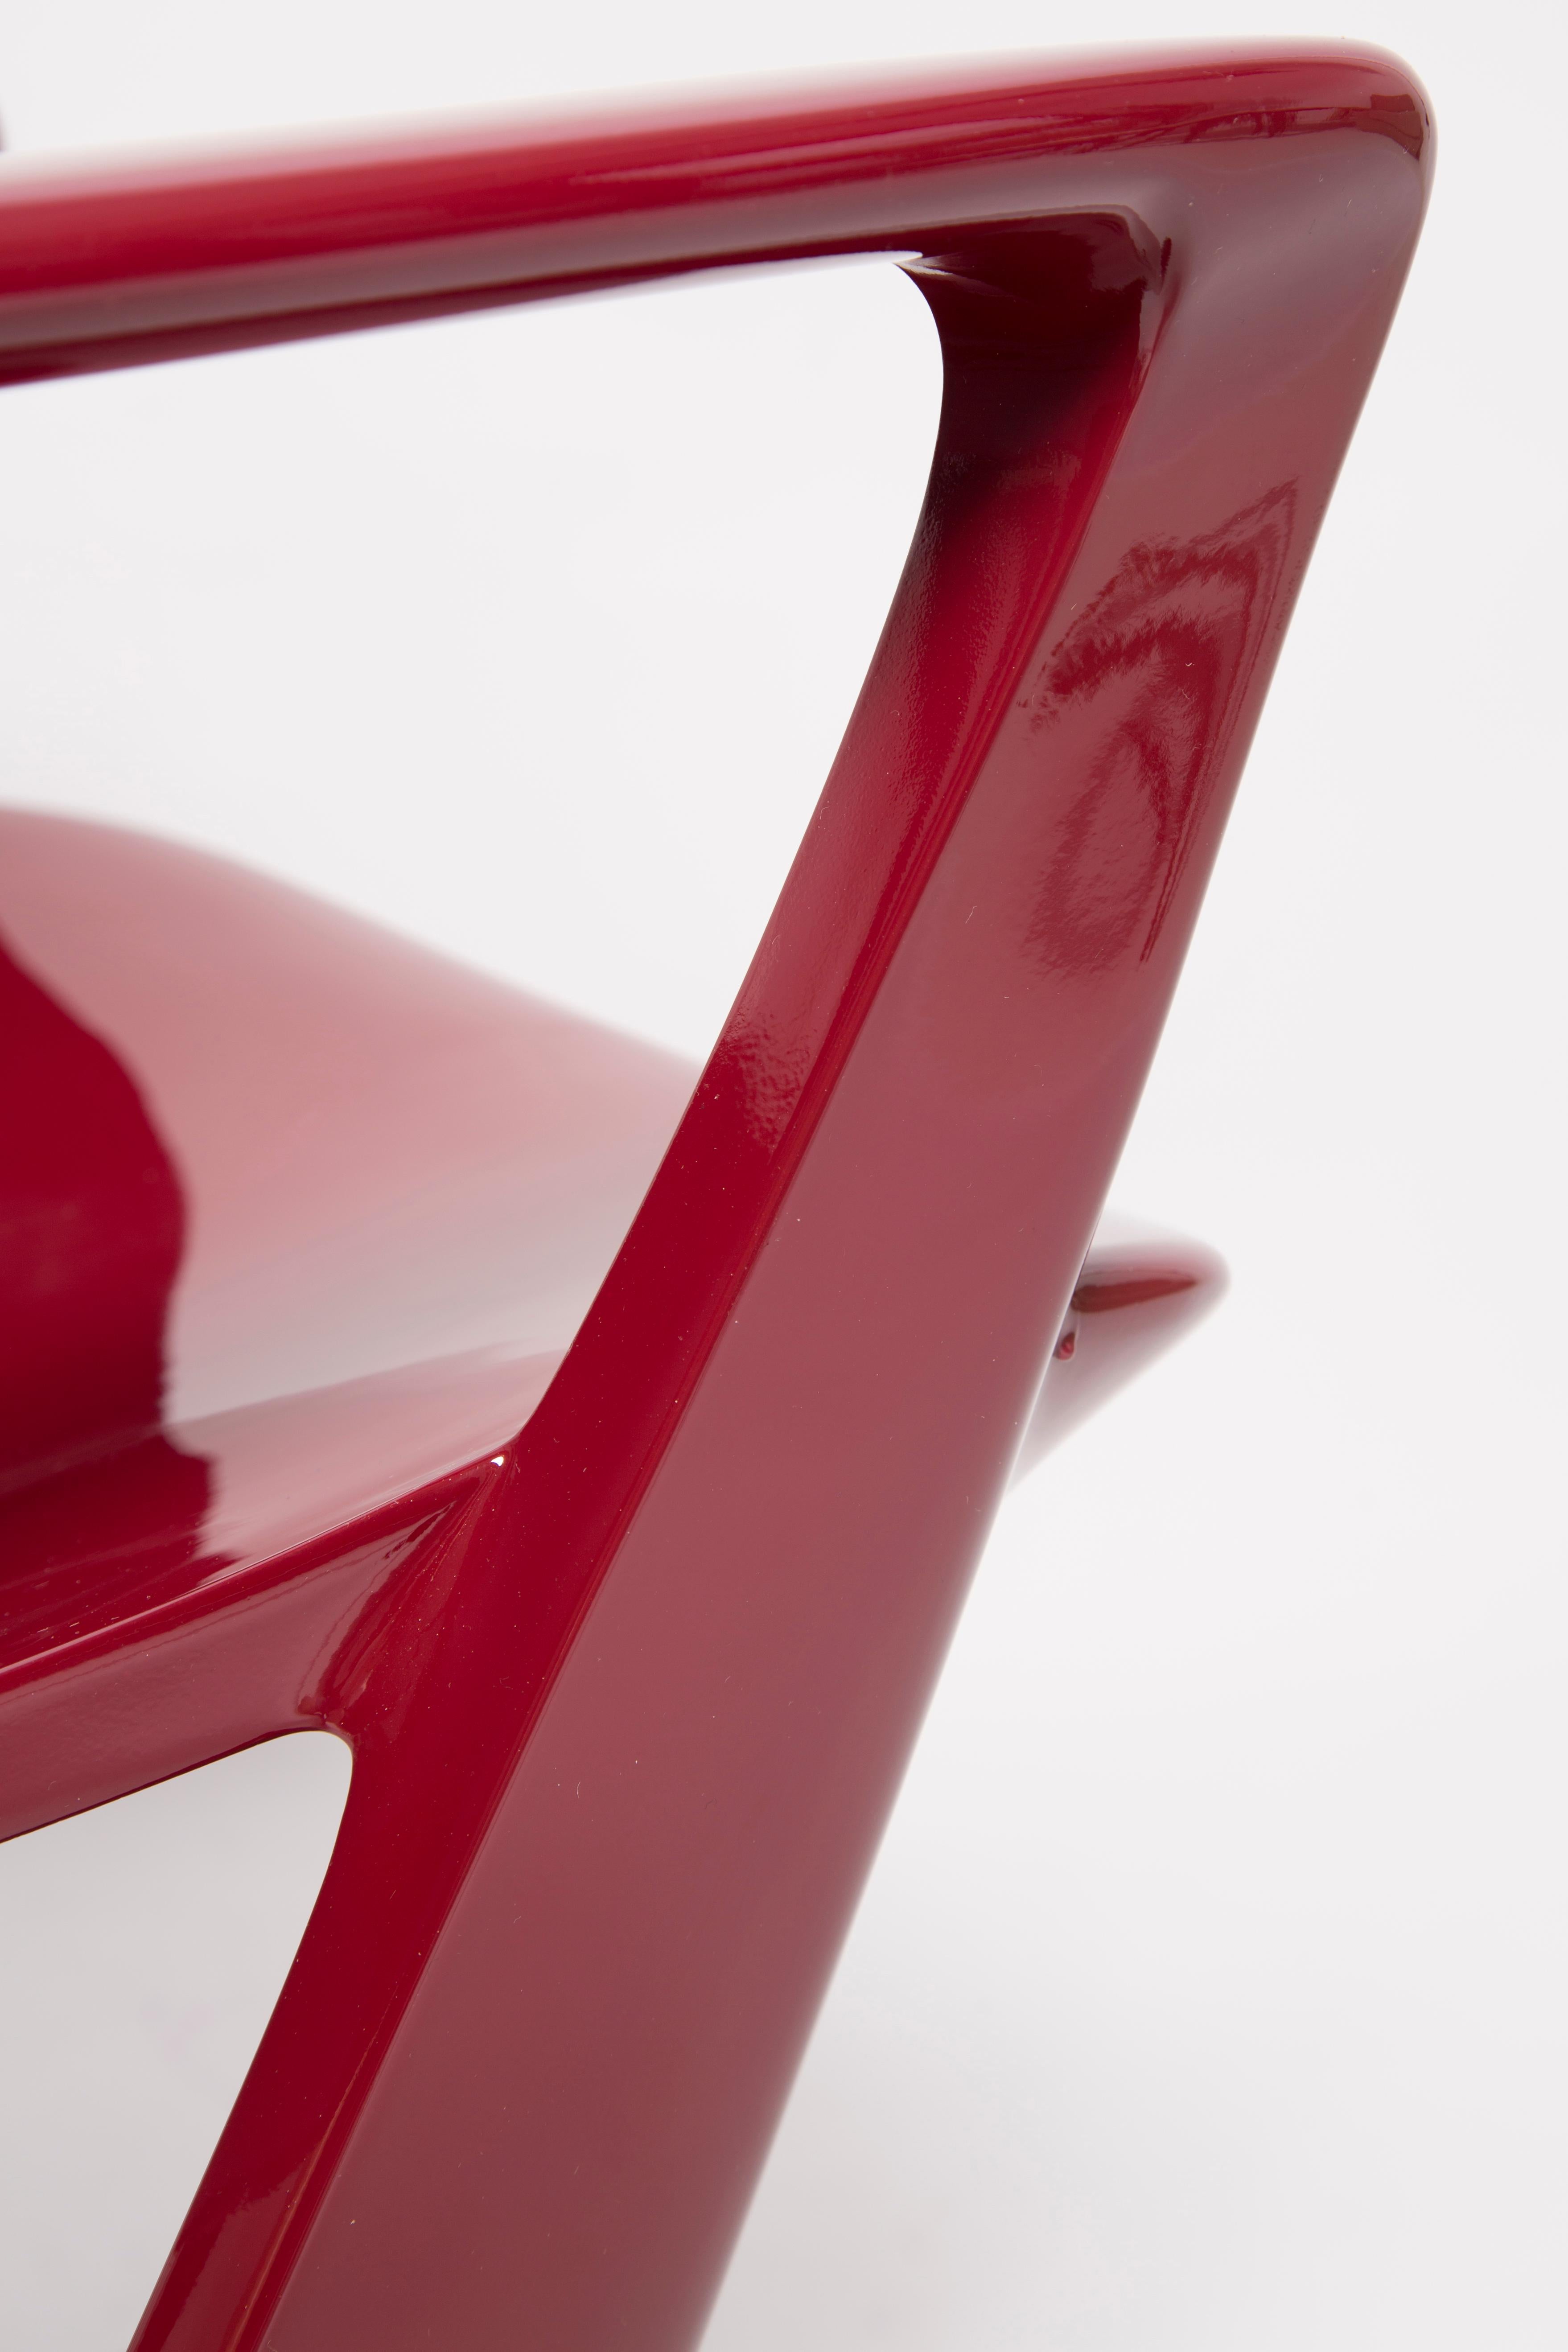 Dark Red Wine Kangaroo Chair Designed by Ernst Moeckl, Germany, 1968 For Sale 1